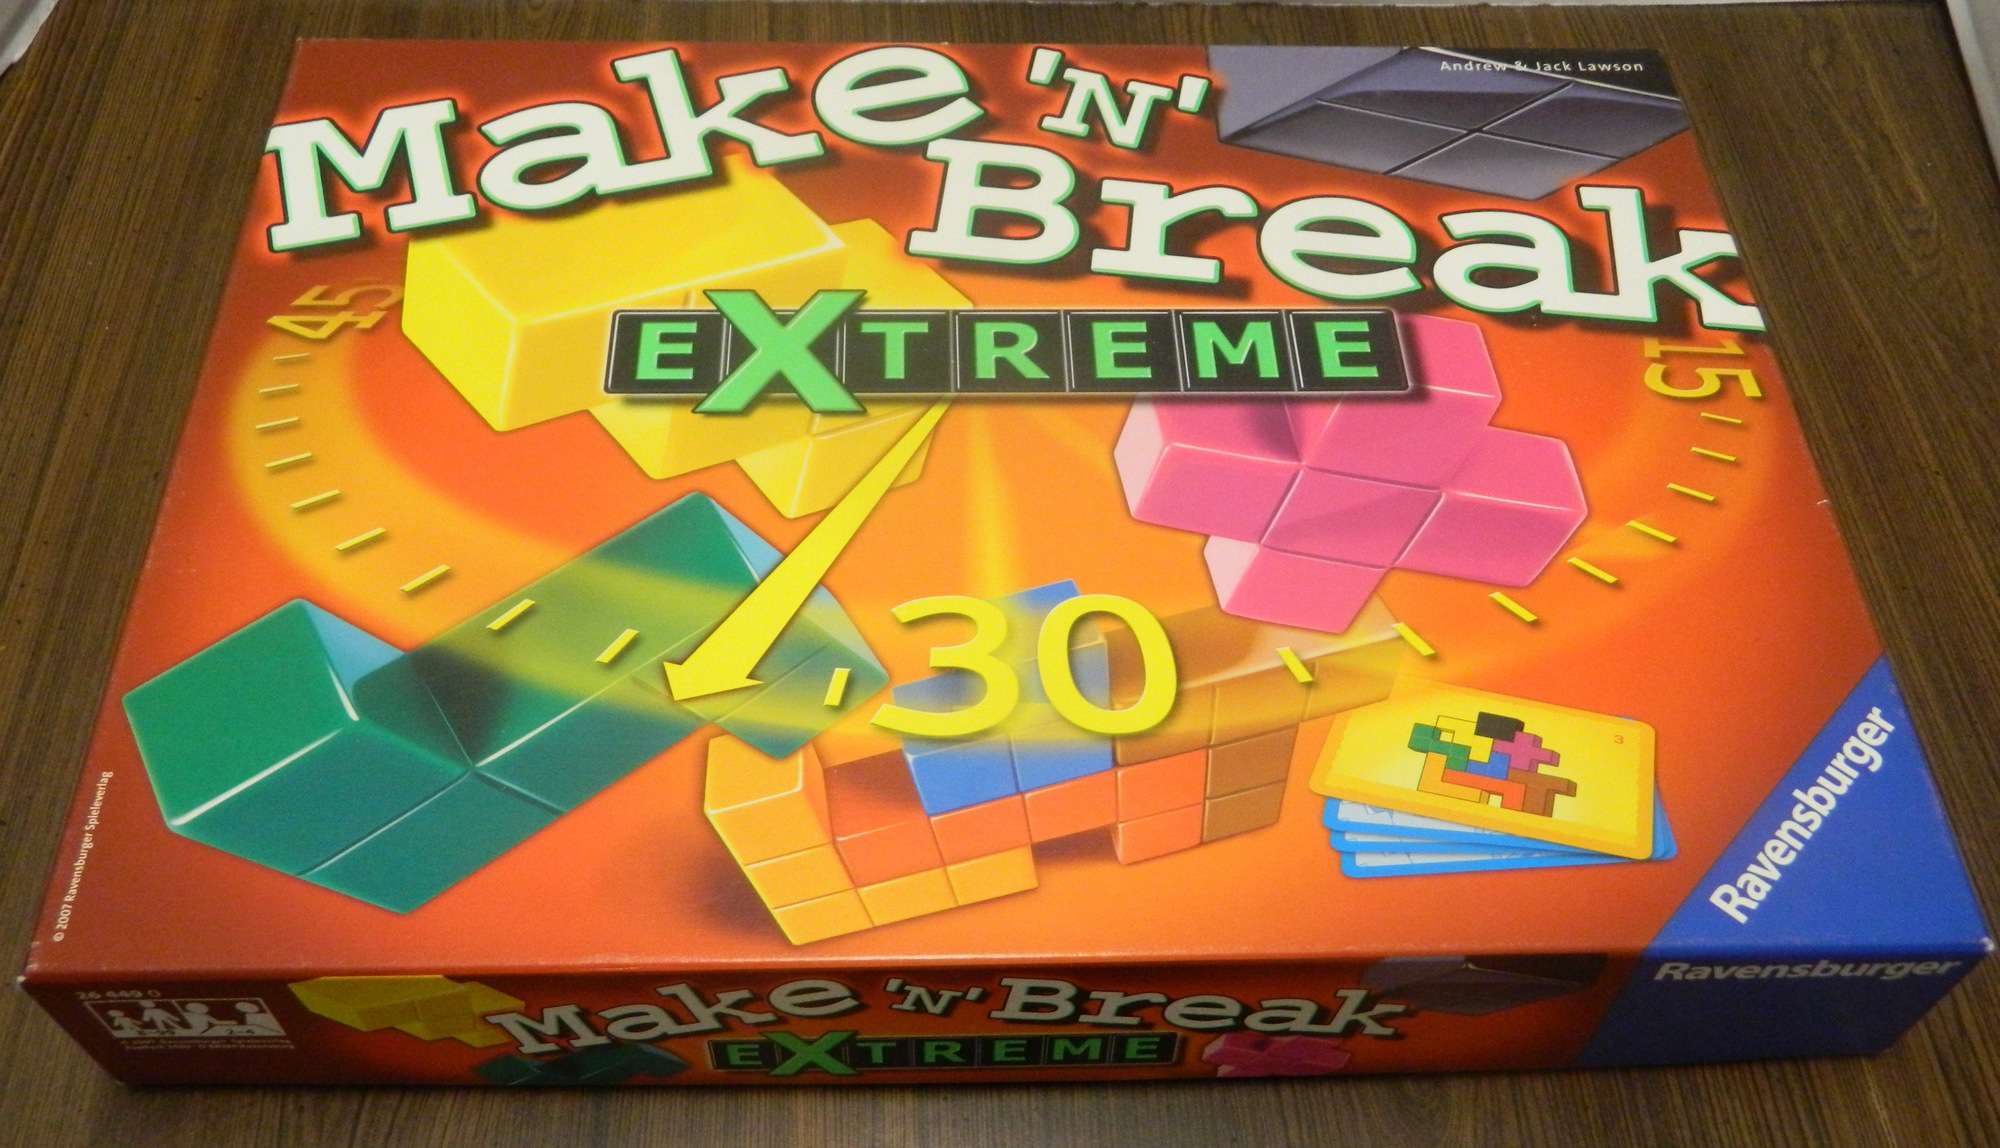 Make ‘N’ Break Extreme Board Game Review